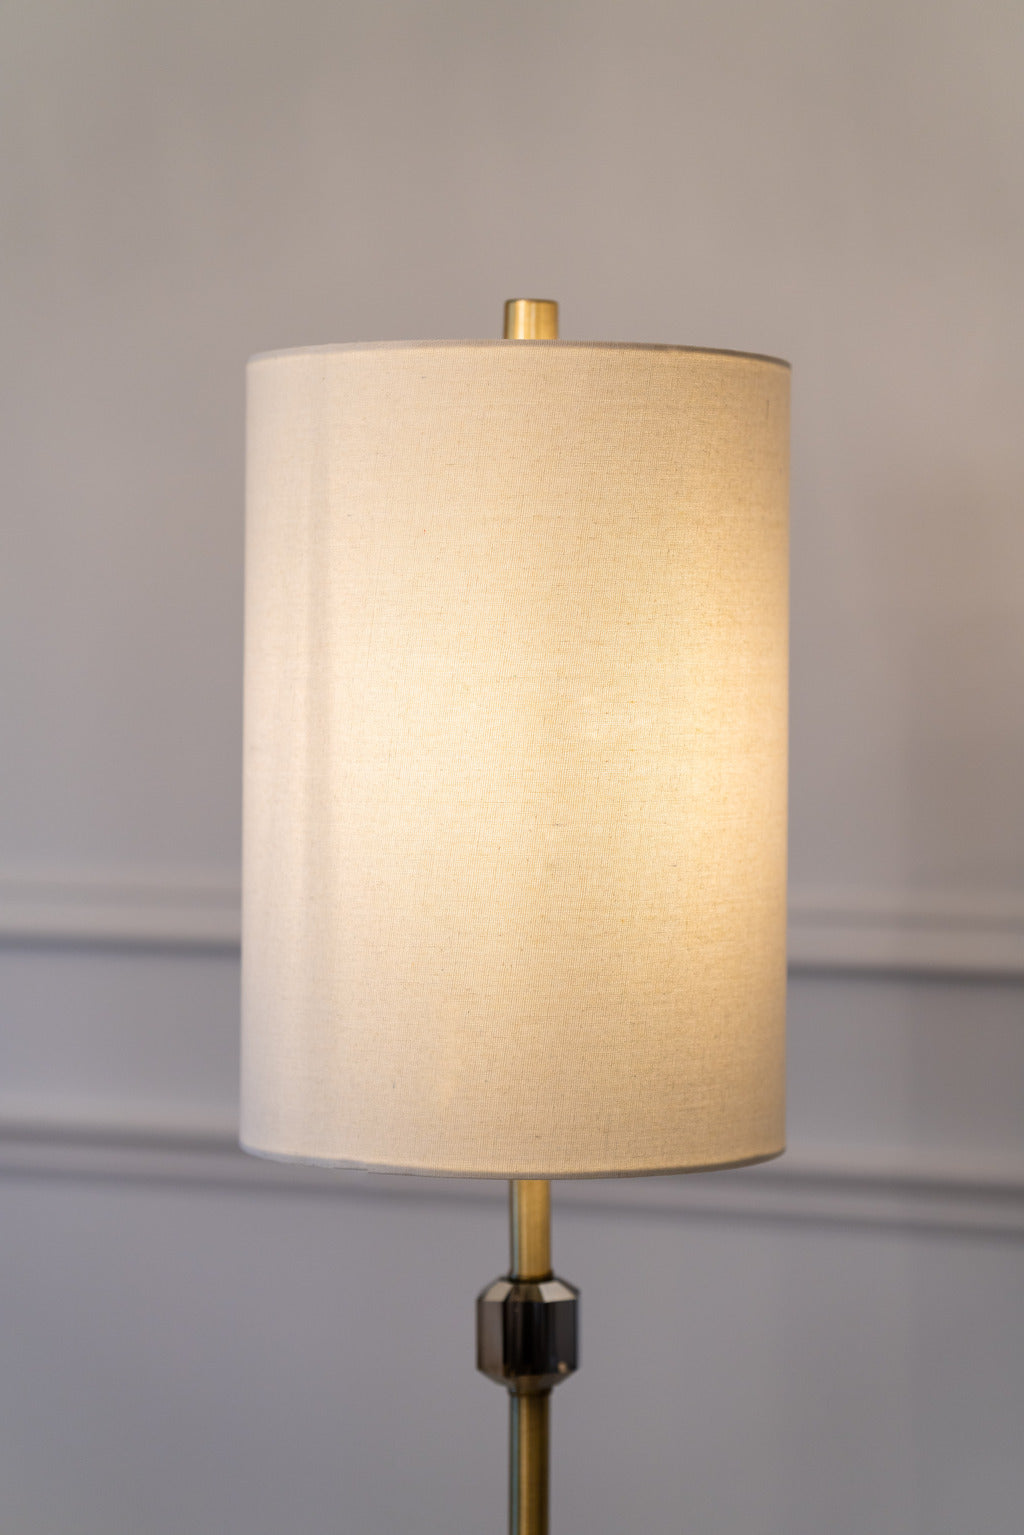 Gold lamp, table lamp, White lampshade, Lampshade, Lamps